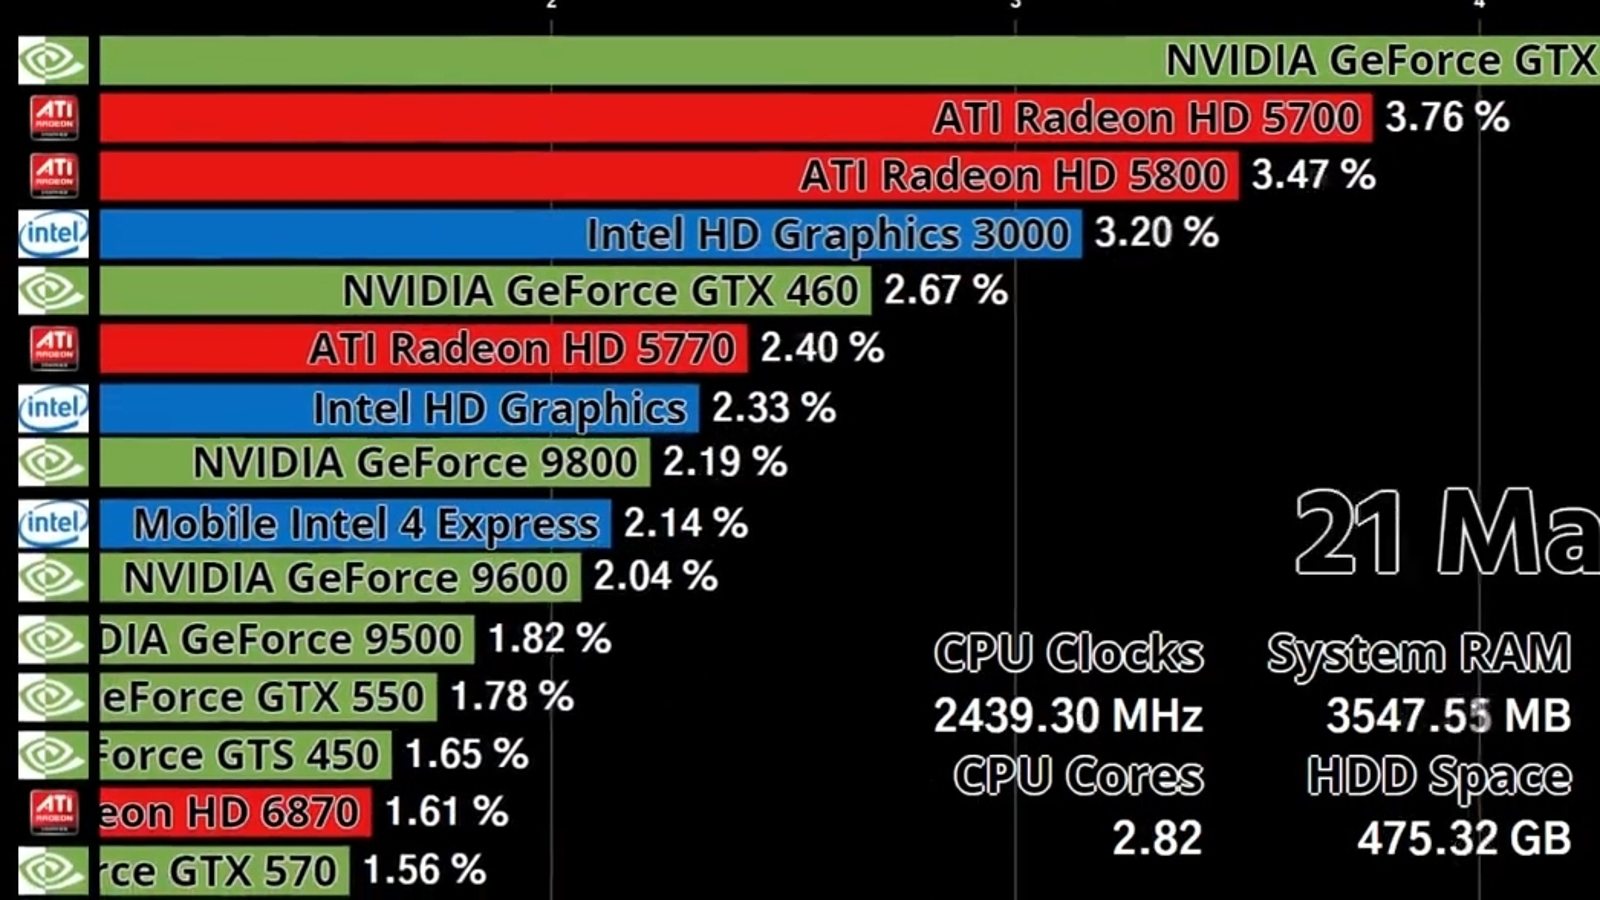 NVIDIA GeForce GPU Prices Go Down, AMD Radeon GPU Prices Go Up As